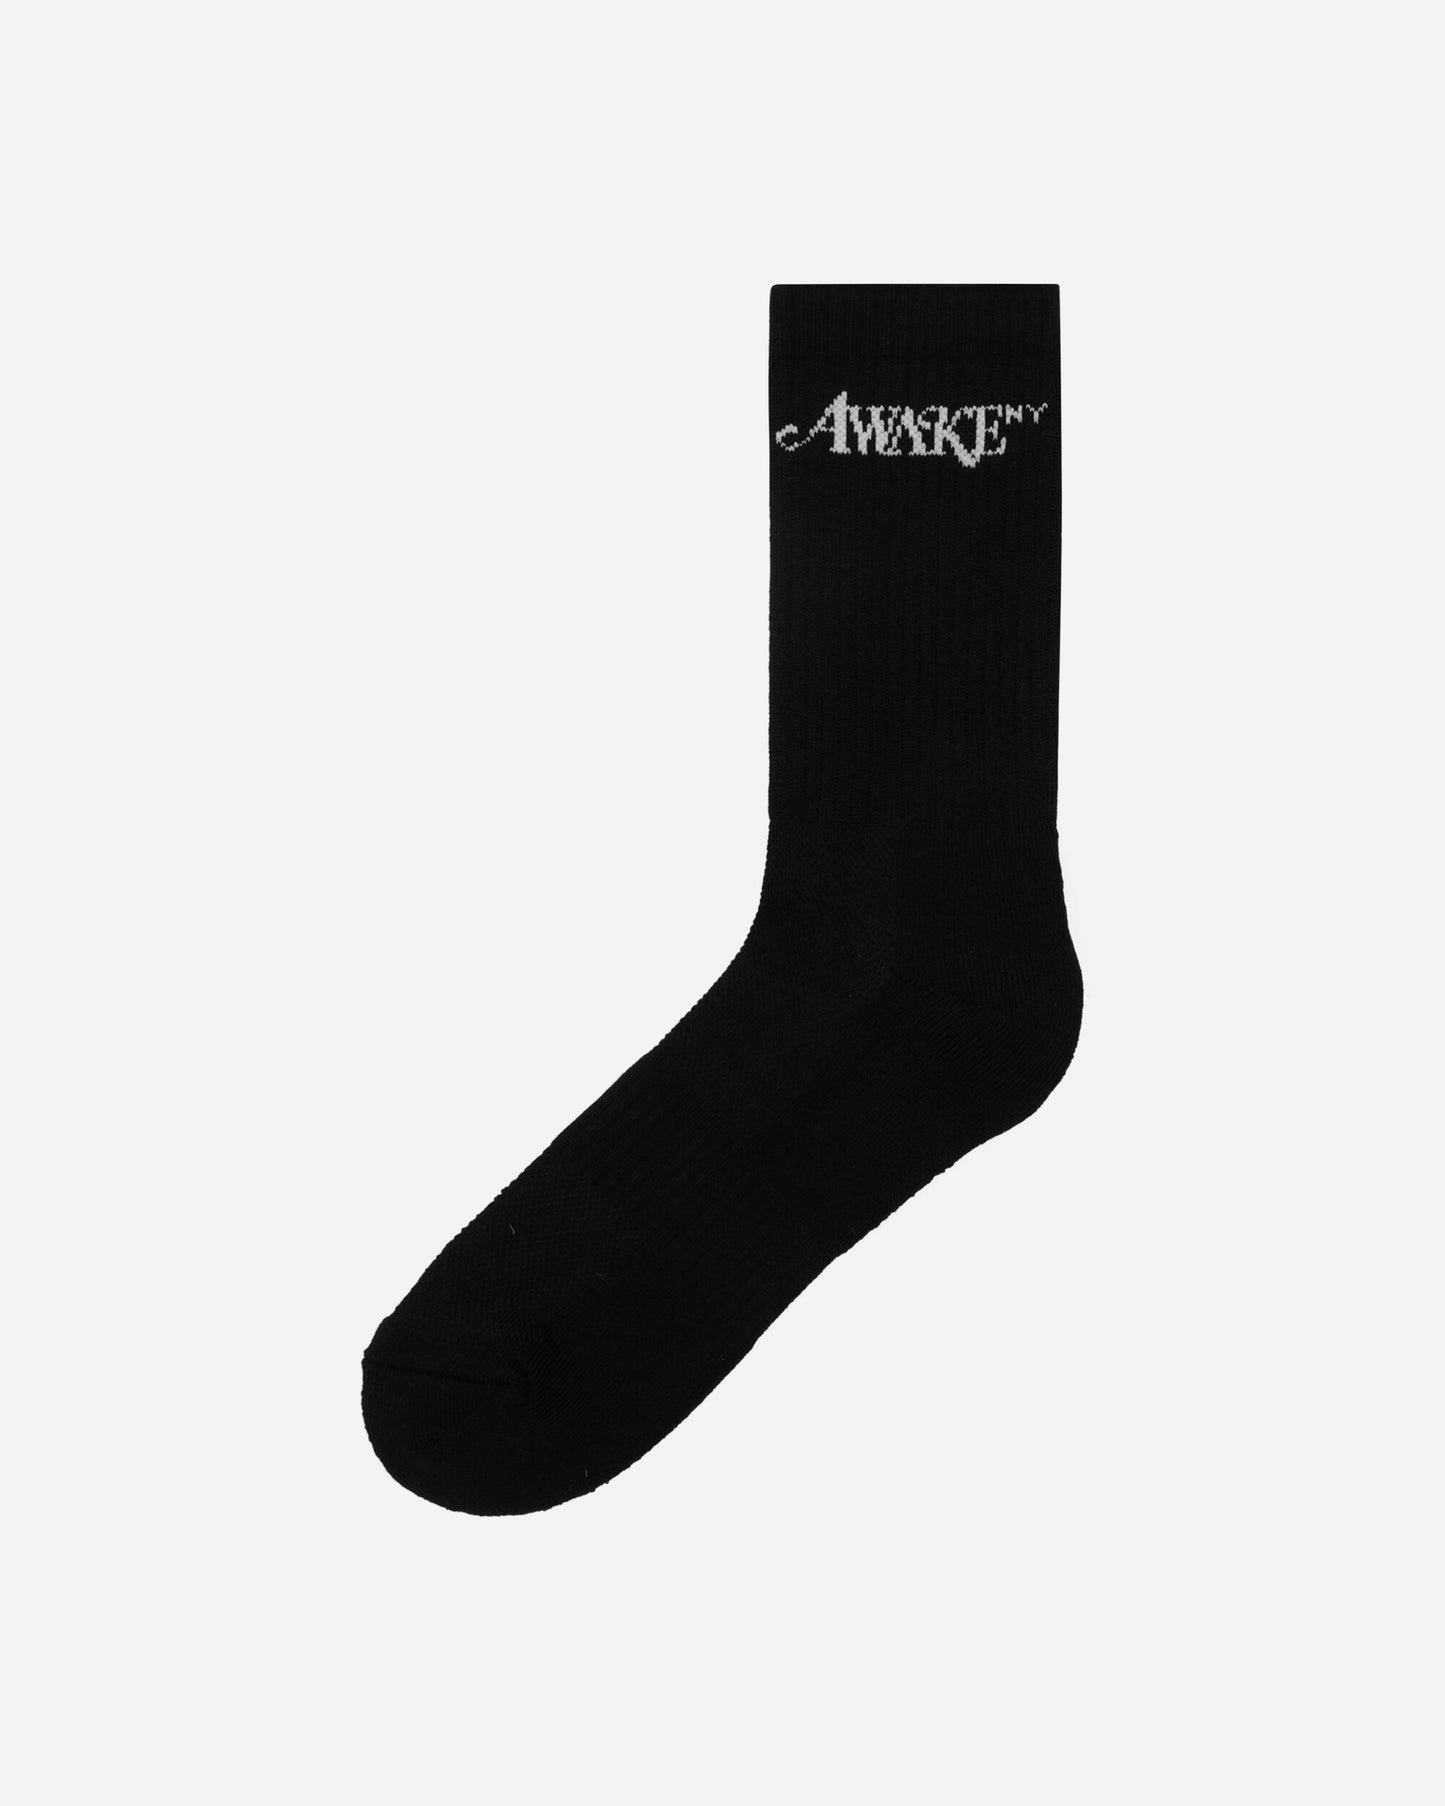 Awake NY Socks Black Underwear Socks 9031832 BLK